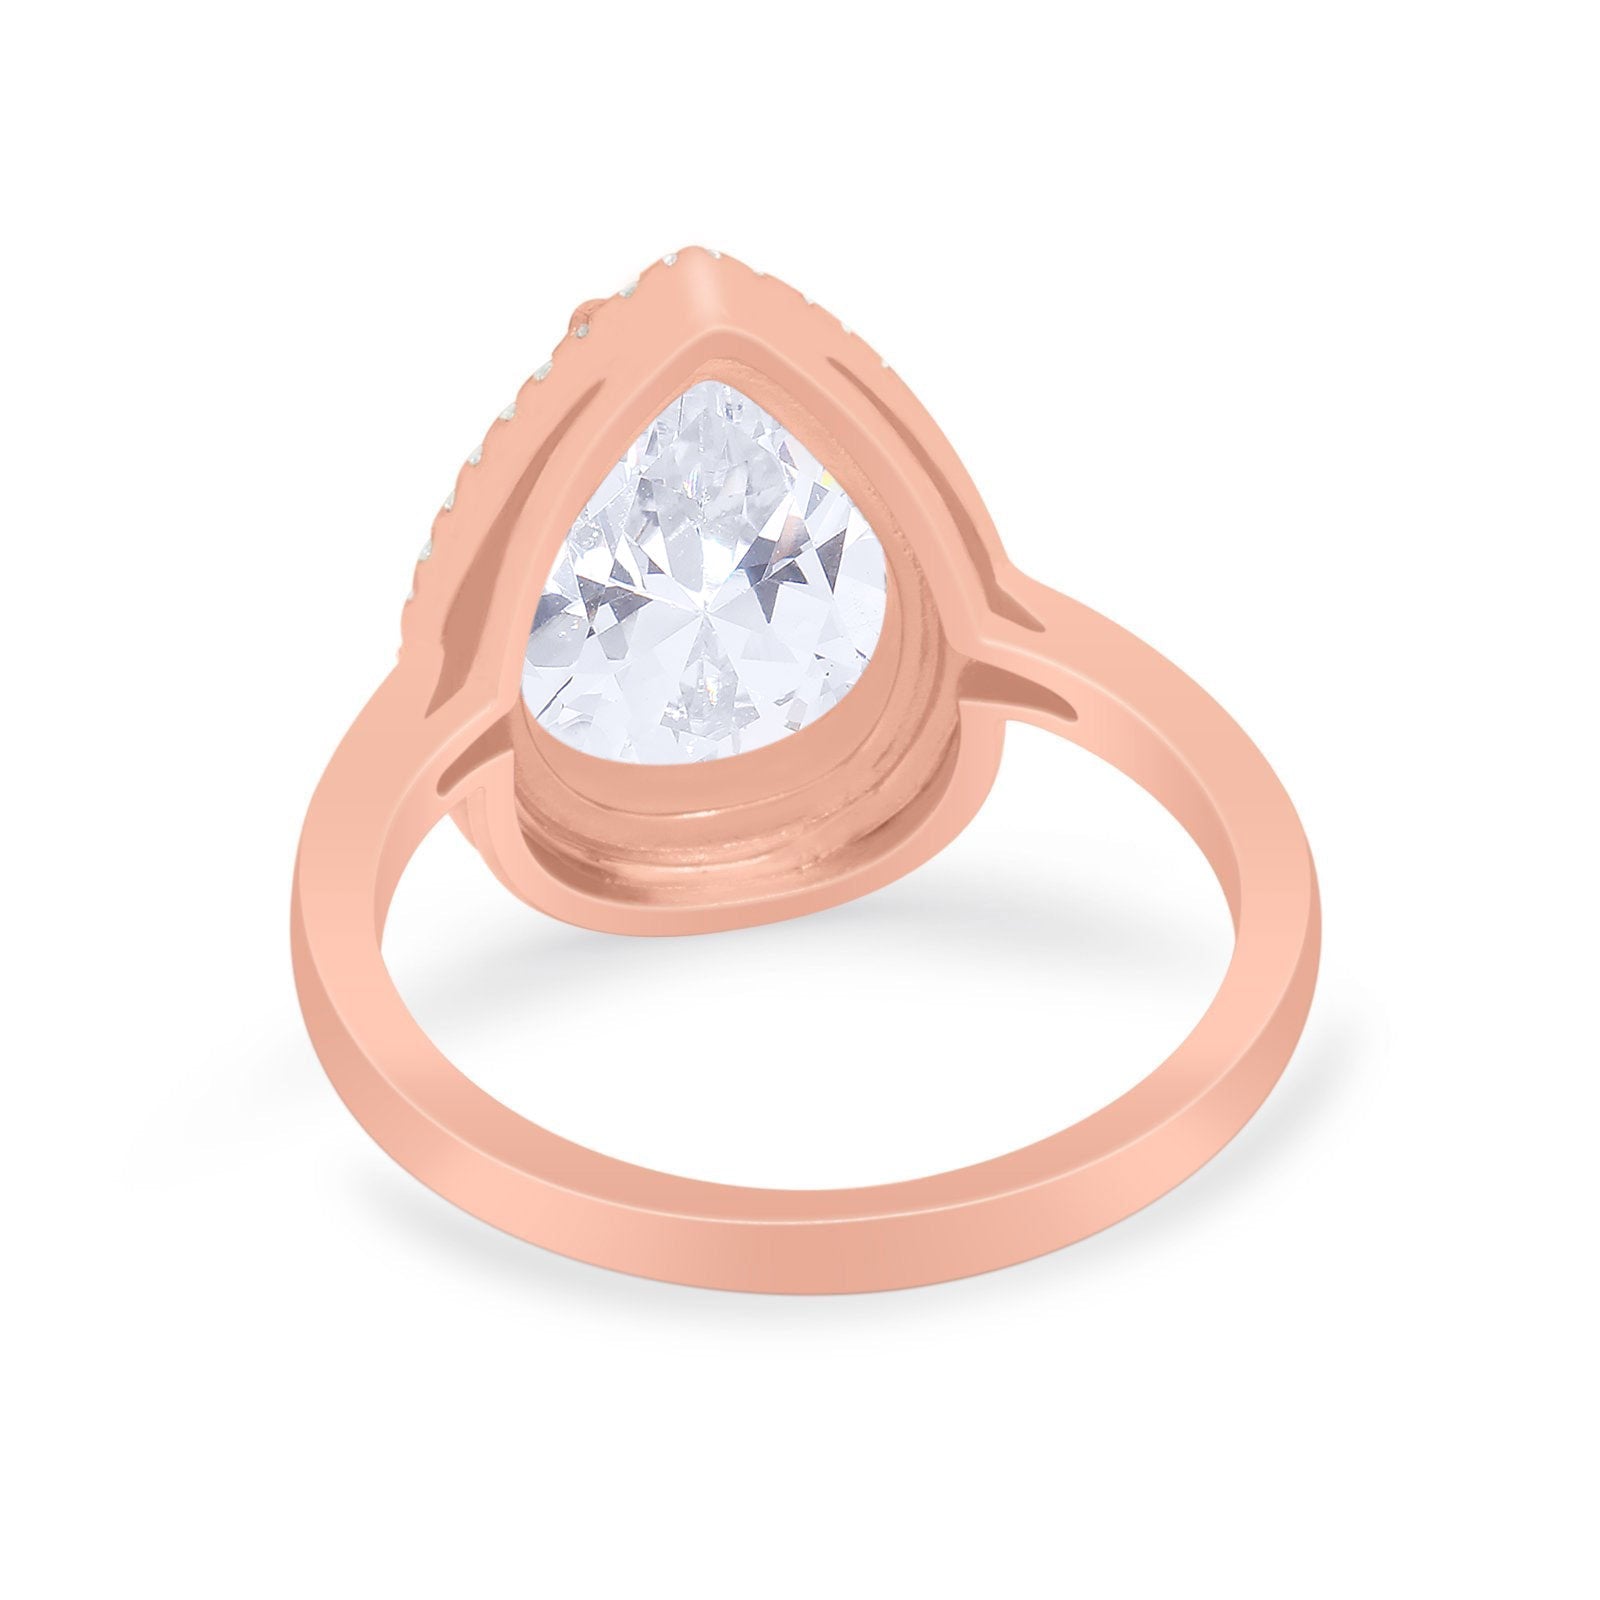 14K Gold Halo Teardrop Pear Shape Bridal Simulated Cubic Zirconia Wedding Engagement Ring